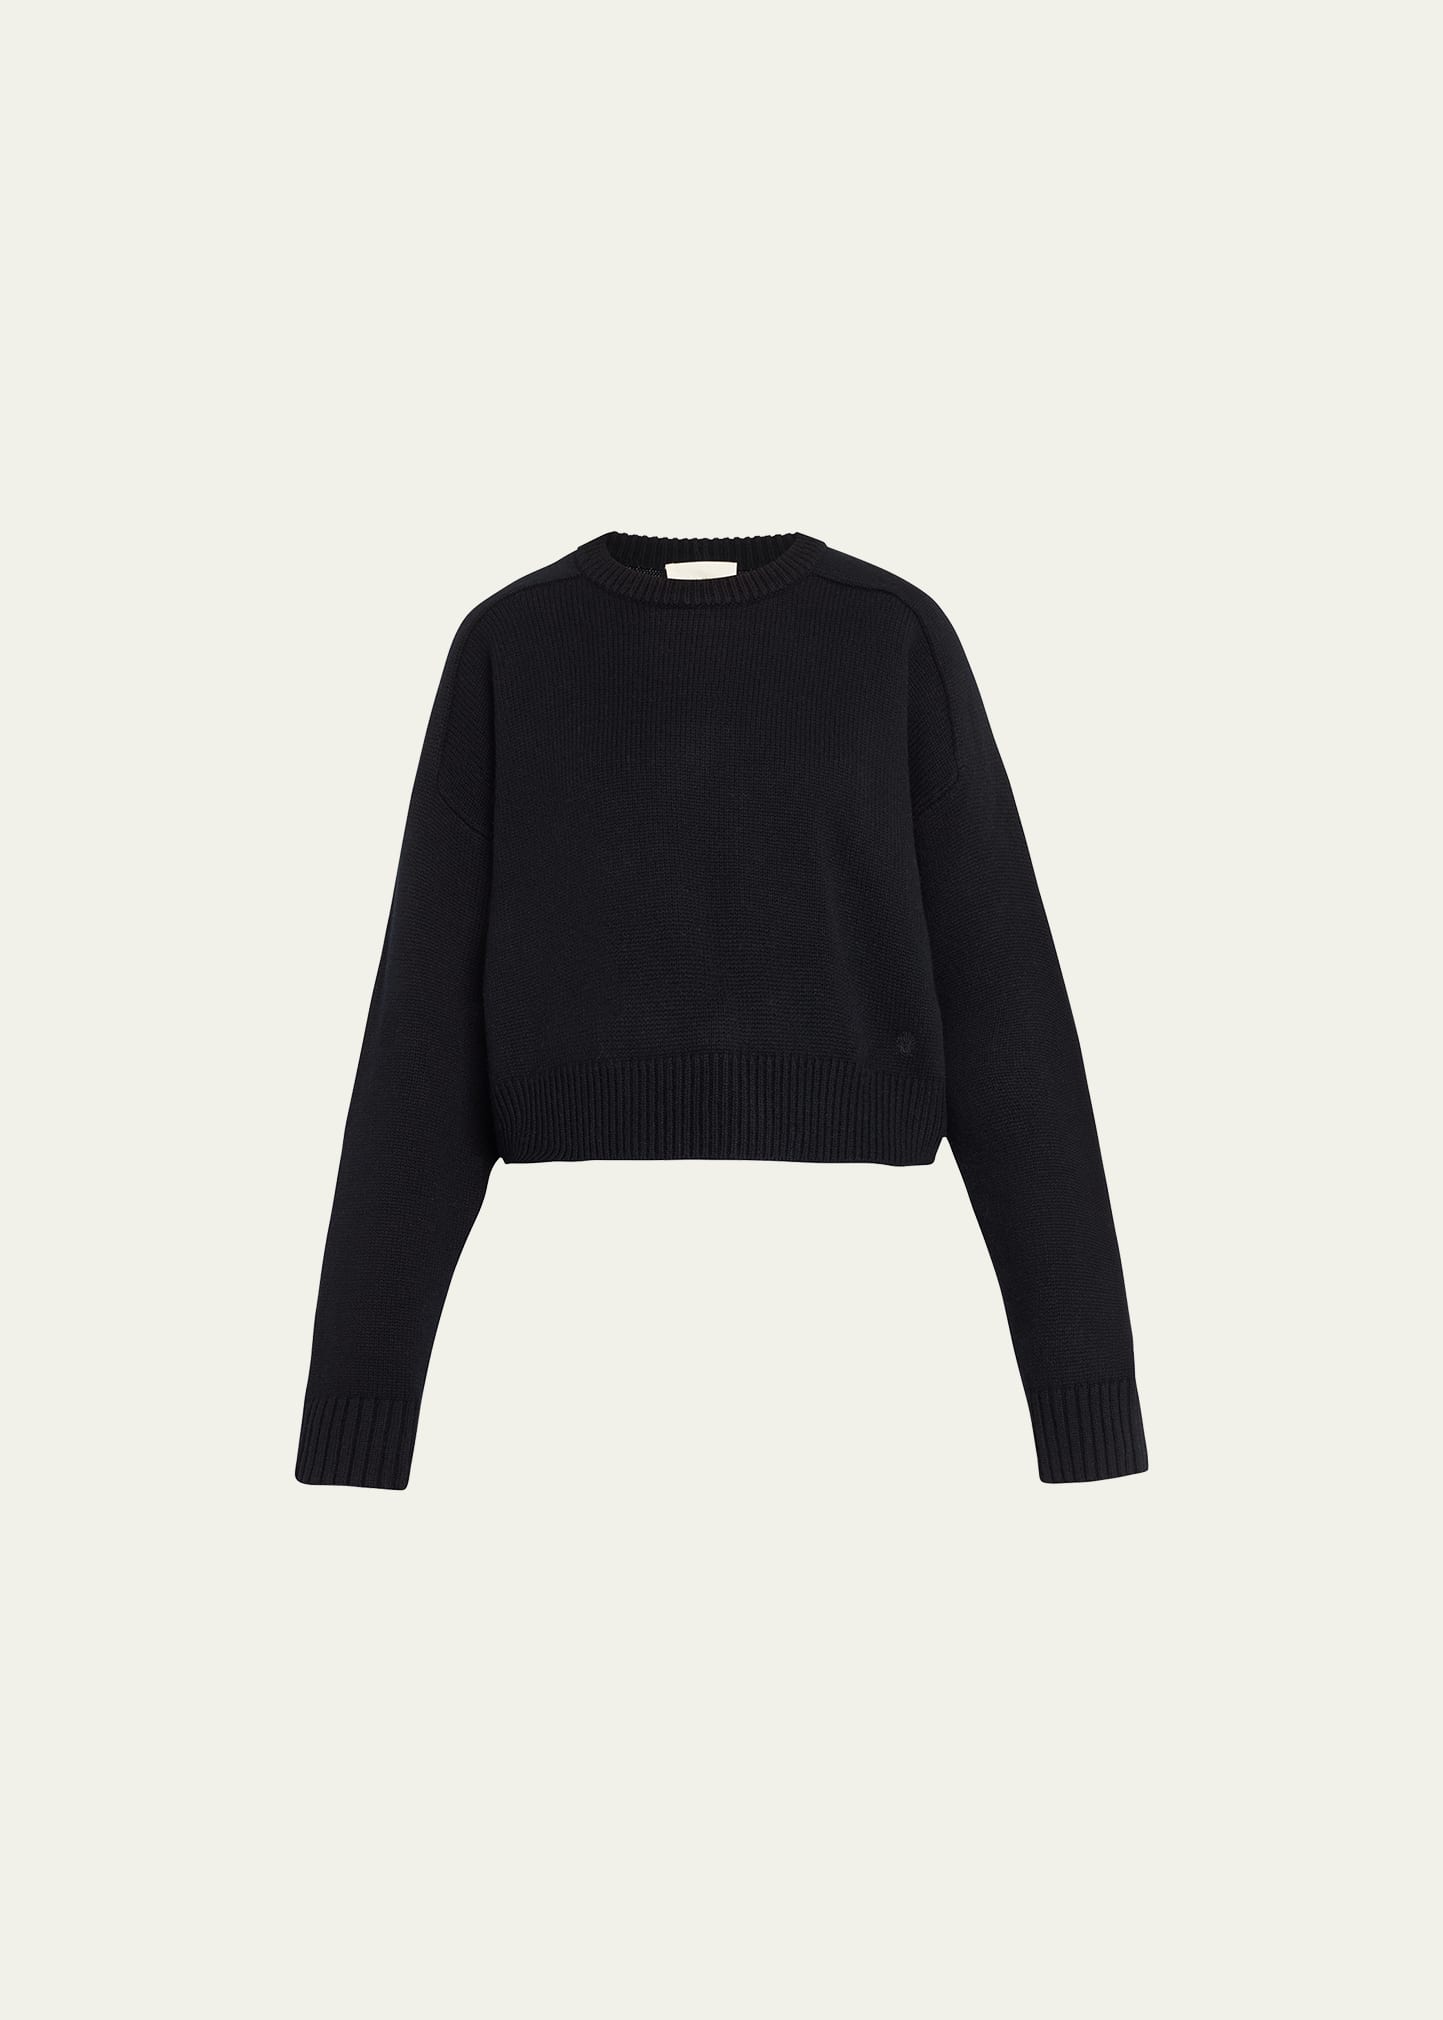 Bruzzi Wool-Cashmere Raglan-Sleeve Crop Sweater